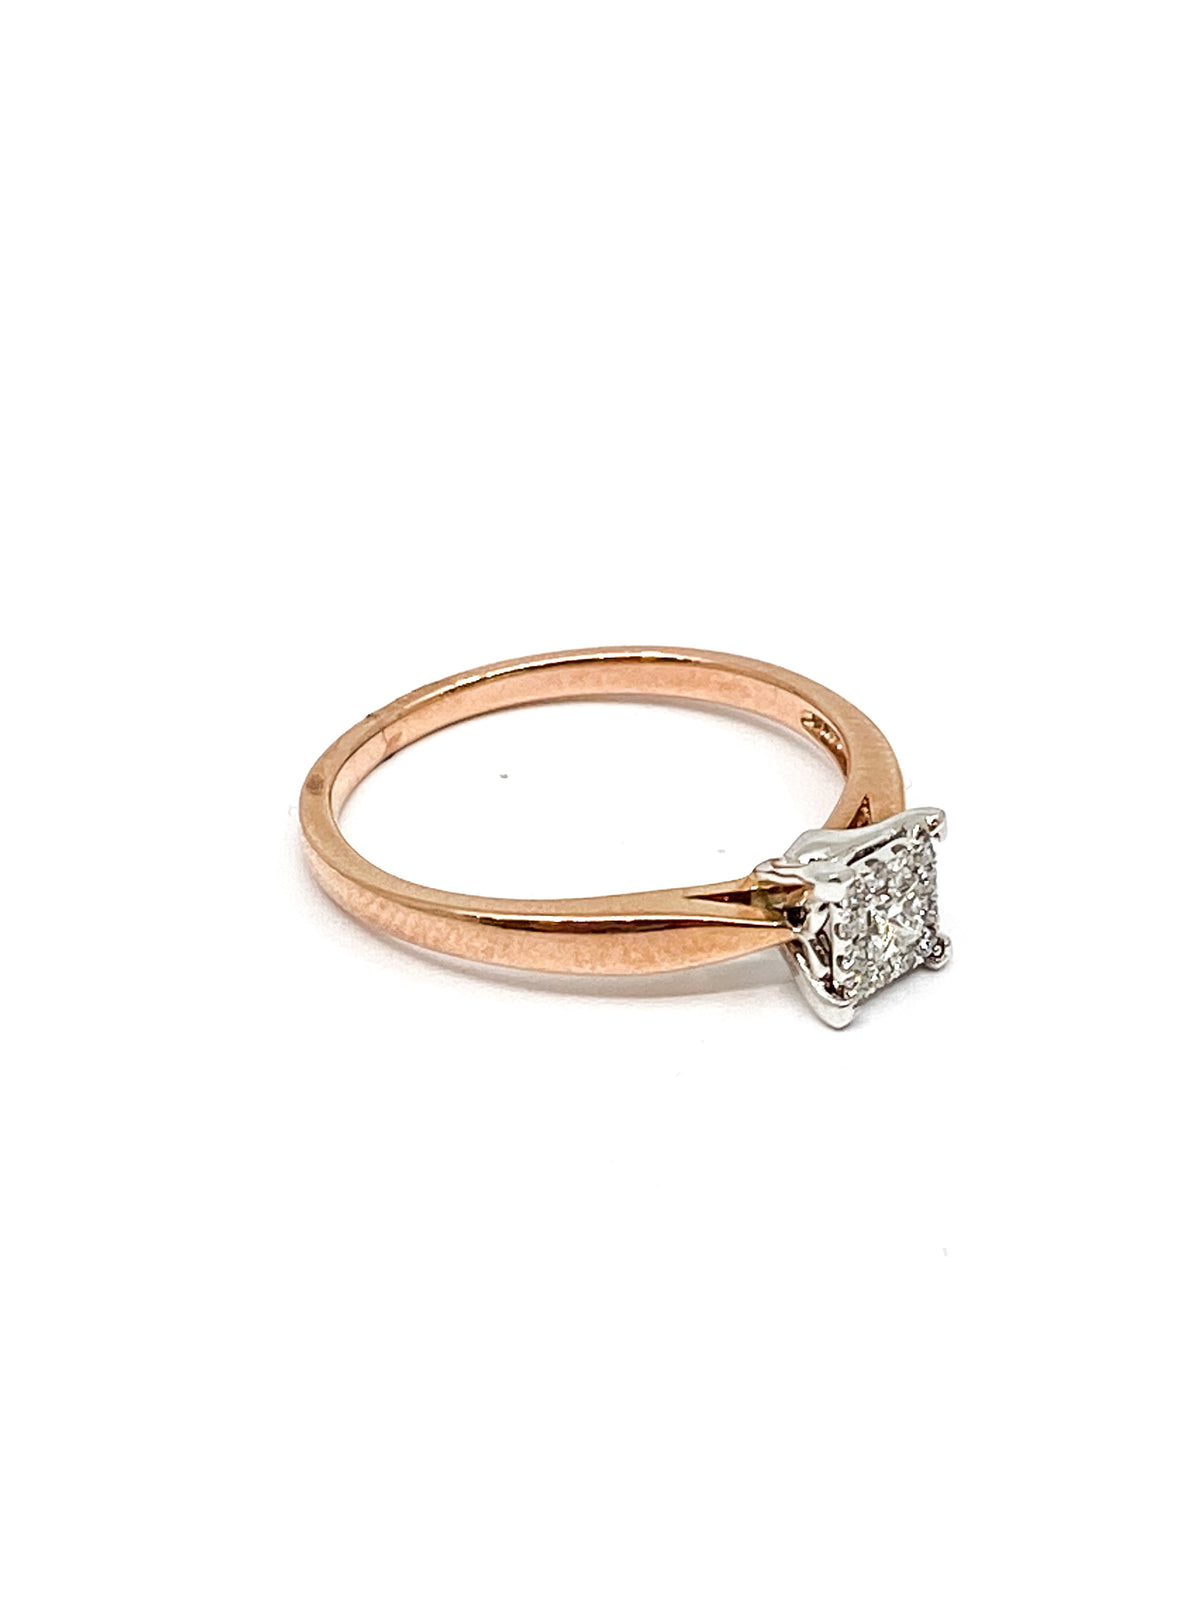 10K Rose Gold 0.13cttw Diamond Ring, size 6.5